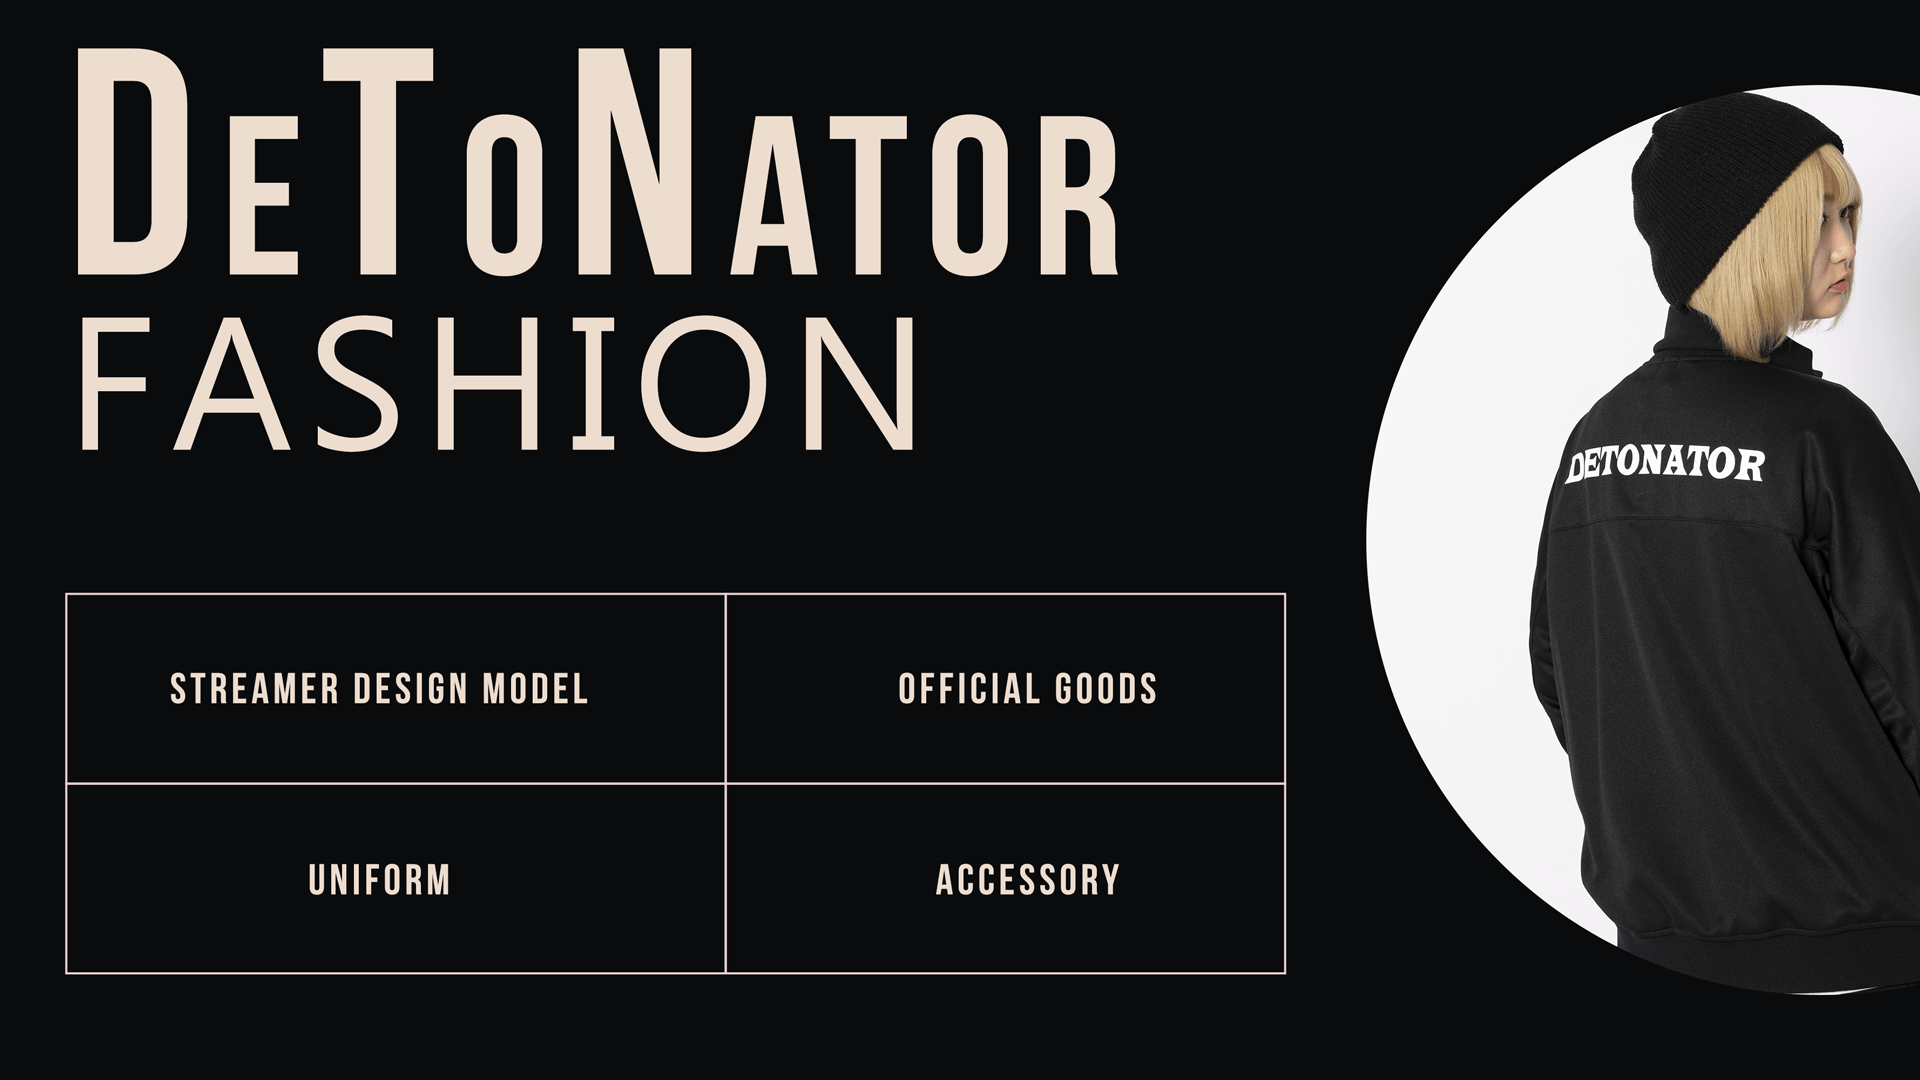 Detonator デトネーター Fashion Detonator Shopアパレル公式通販 ソフマップ Sofmap